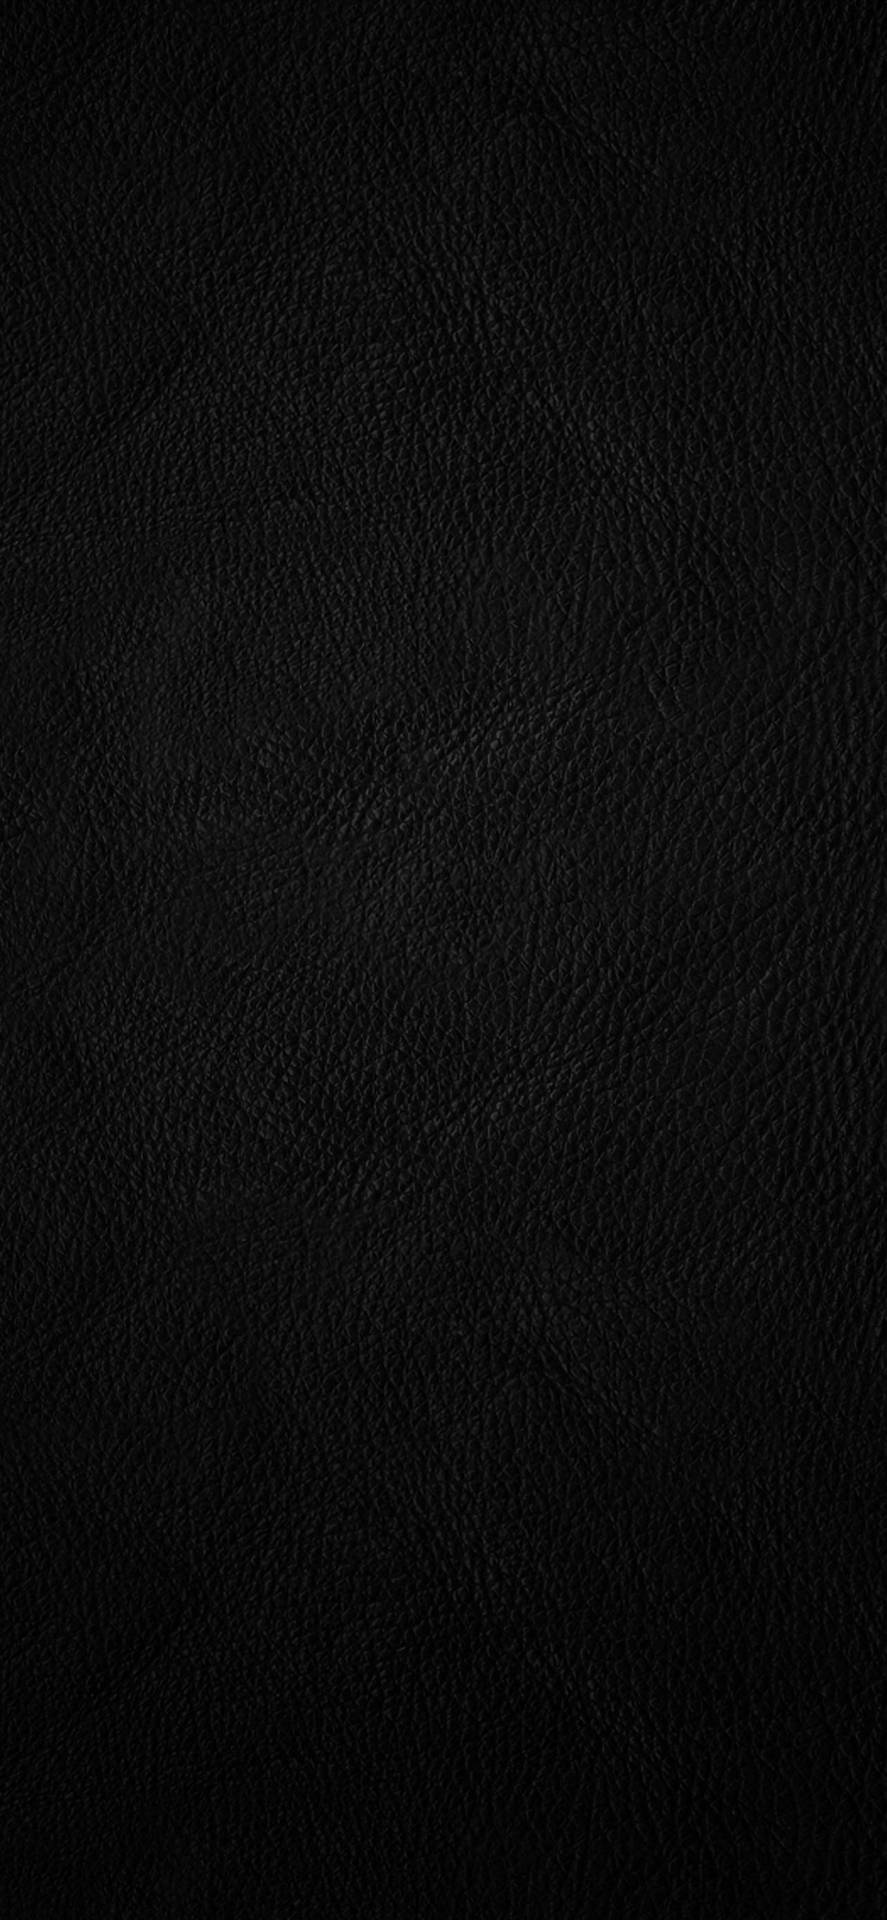 Plain Black Iphone Leather Wallpaper